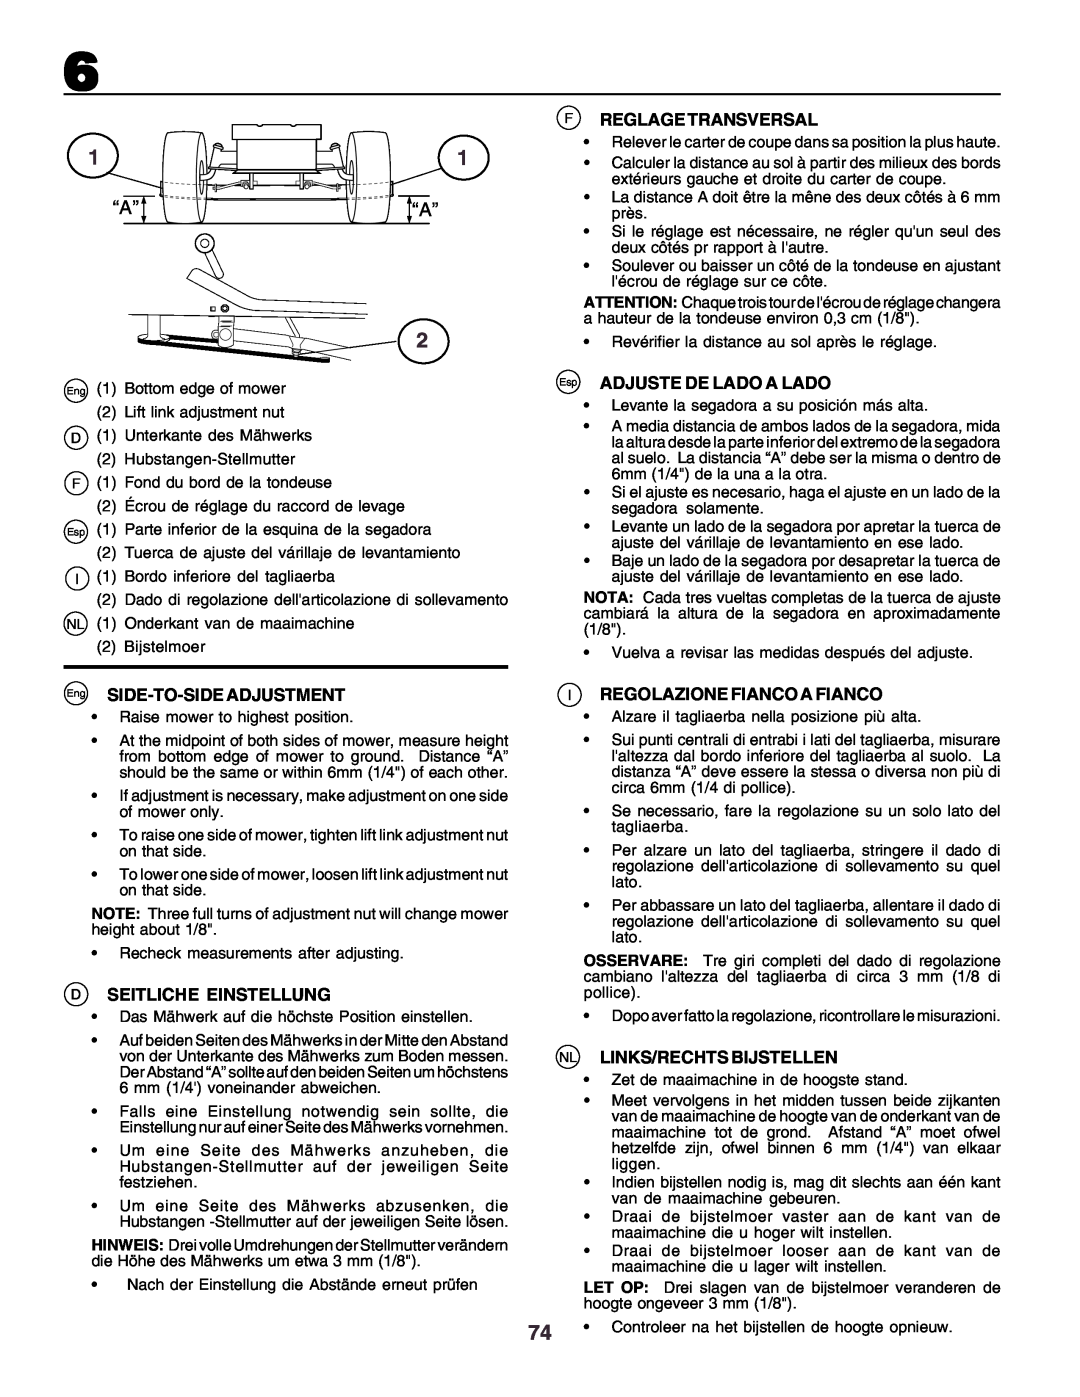 Husqvarna CT130 instruction manual “A”“A”, Eng SIDE-TO-SIDE ADJUSTMENT, Seitliche Einstellung, F Reglage Transversal 